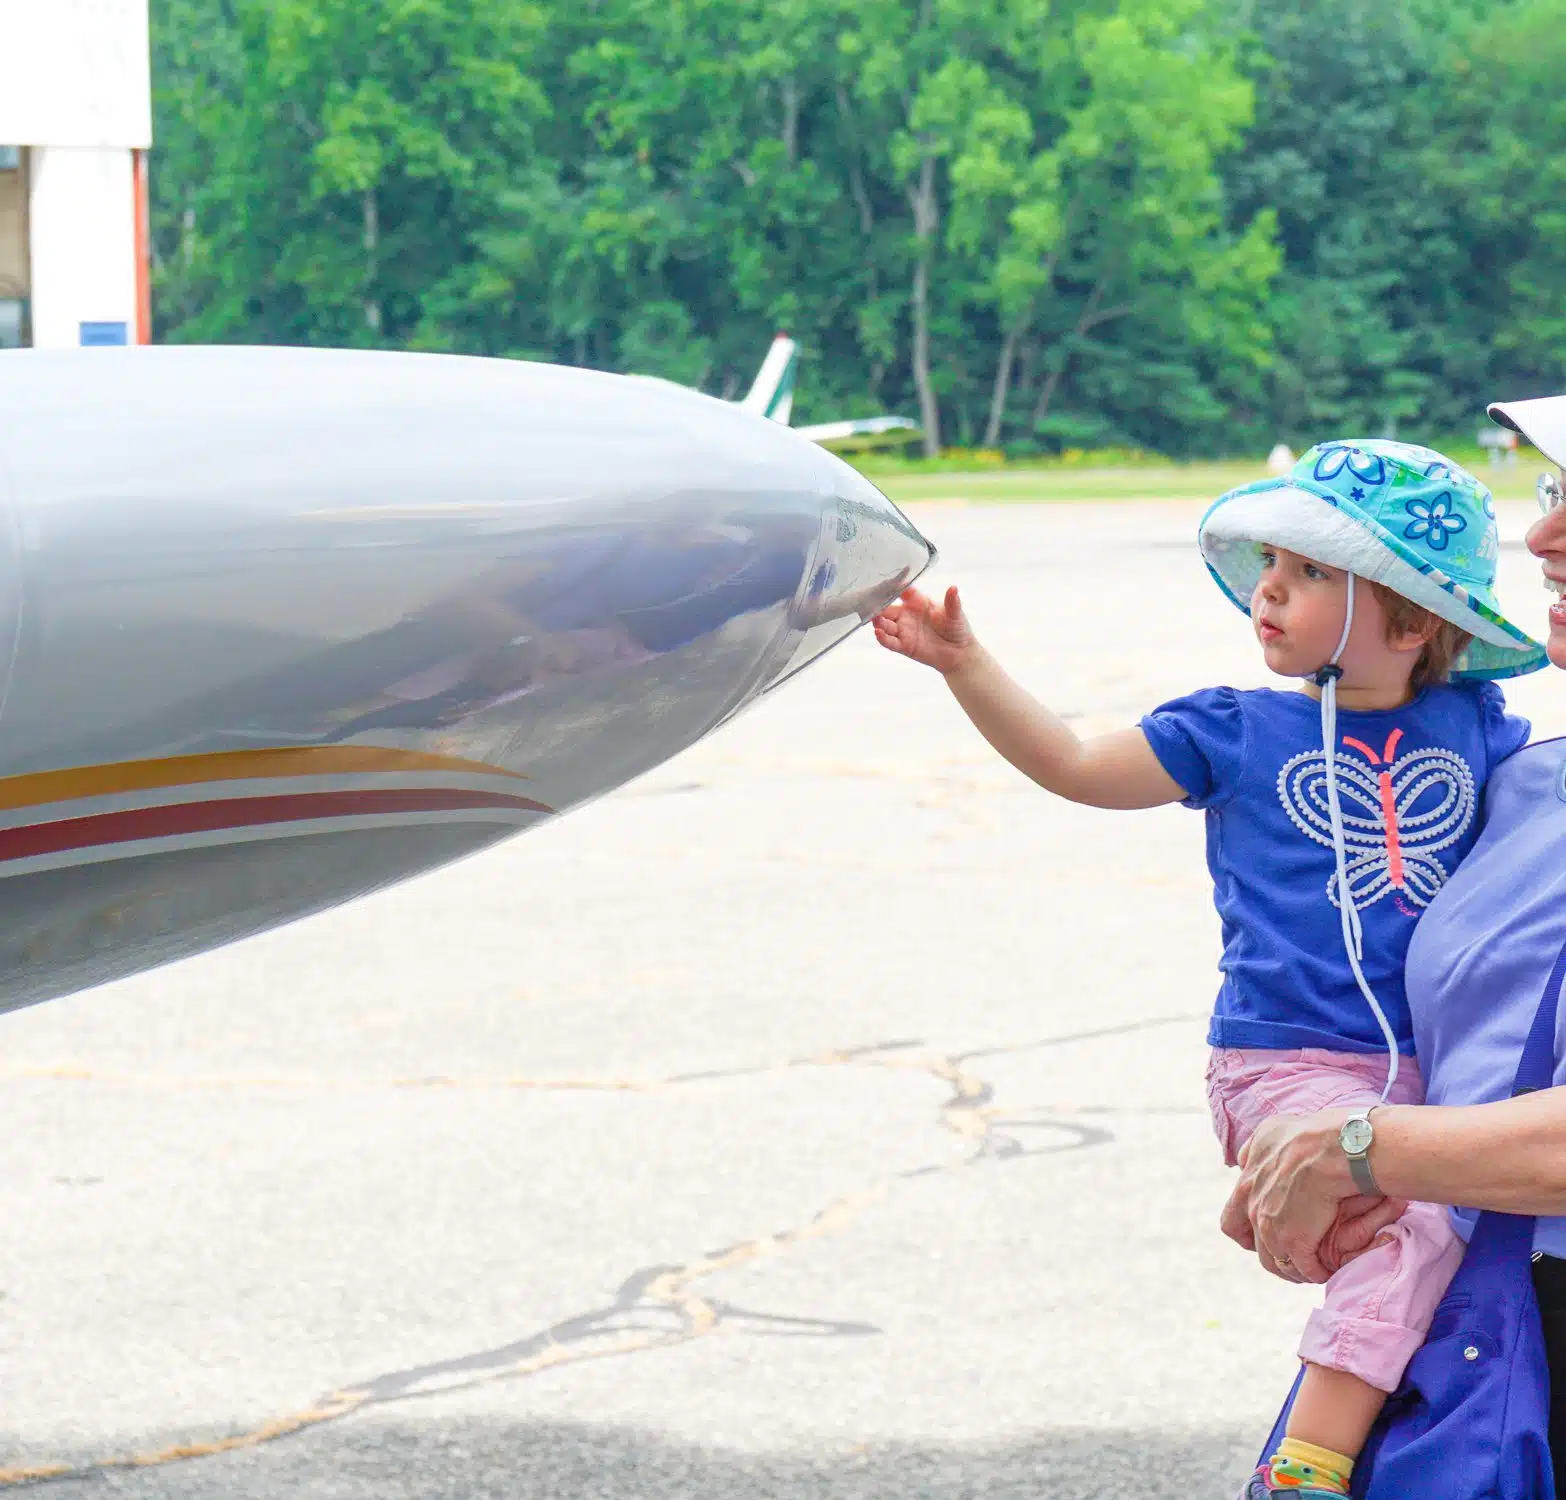 Child touching airplane nose